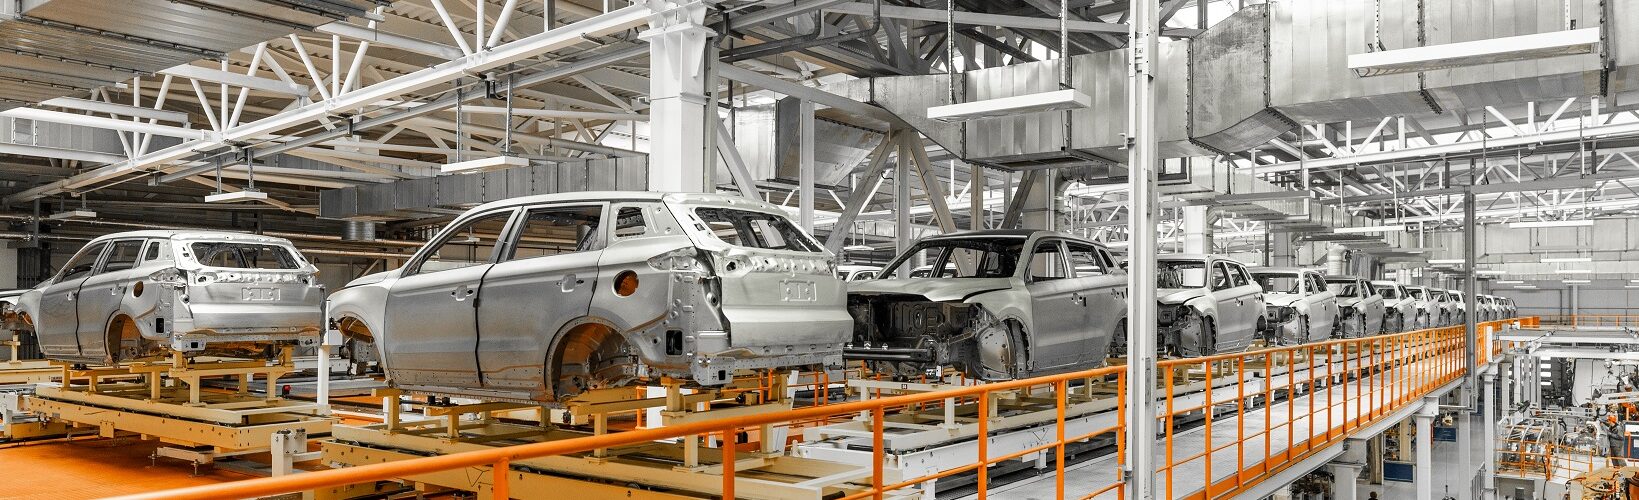 Automobile production line. Welding car body. Modern car assembly plant